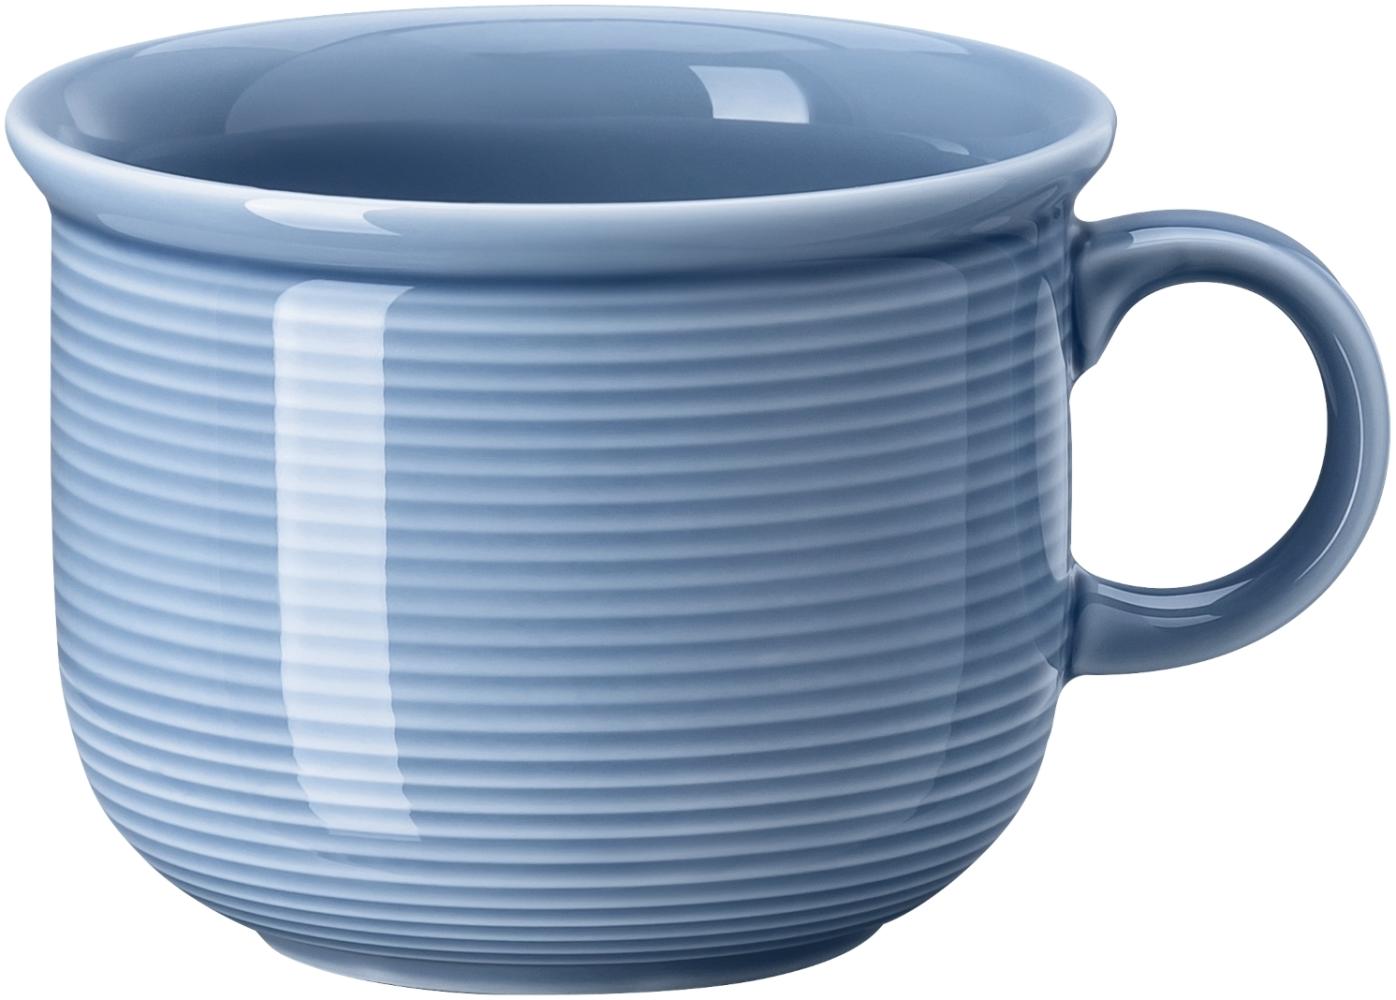 Thomas Kaffee-Obertasse Trend Colour Arctic Blue, Becher, Obere, Porzellan, Blau, 180 ml, 11400-401927-14742 Bild 1